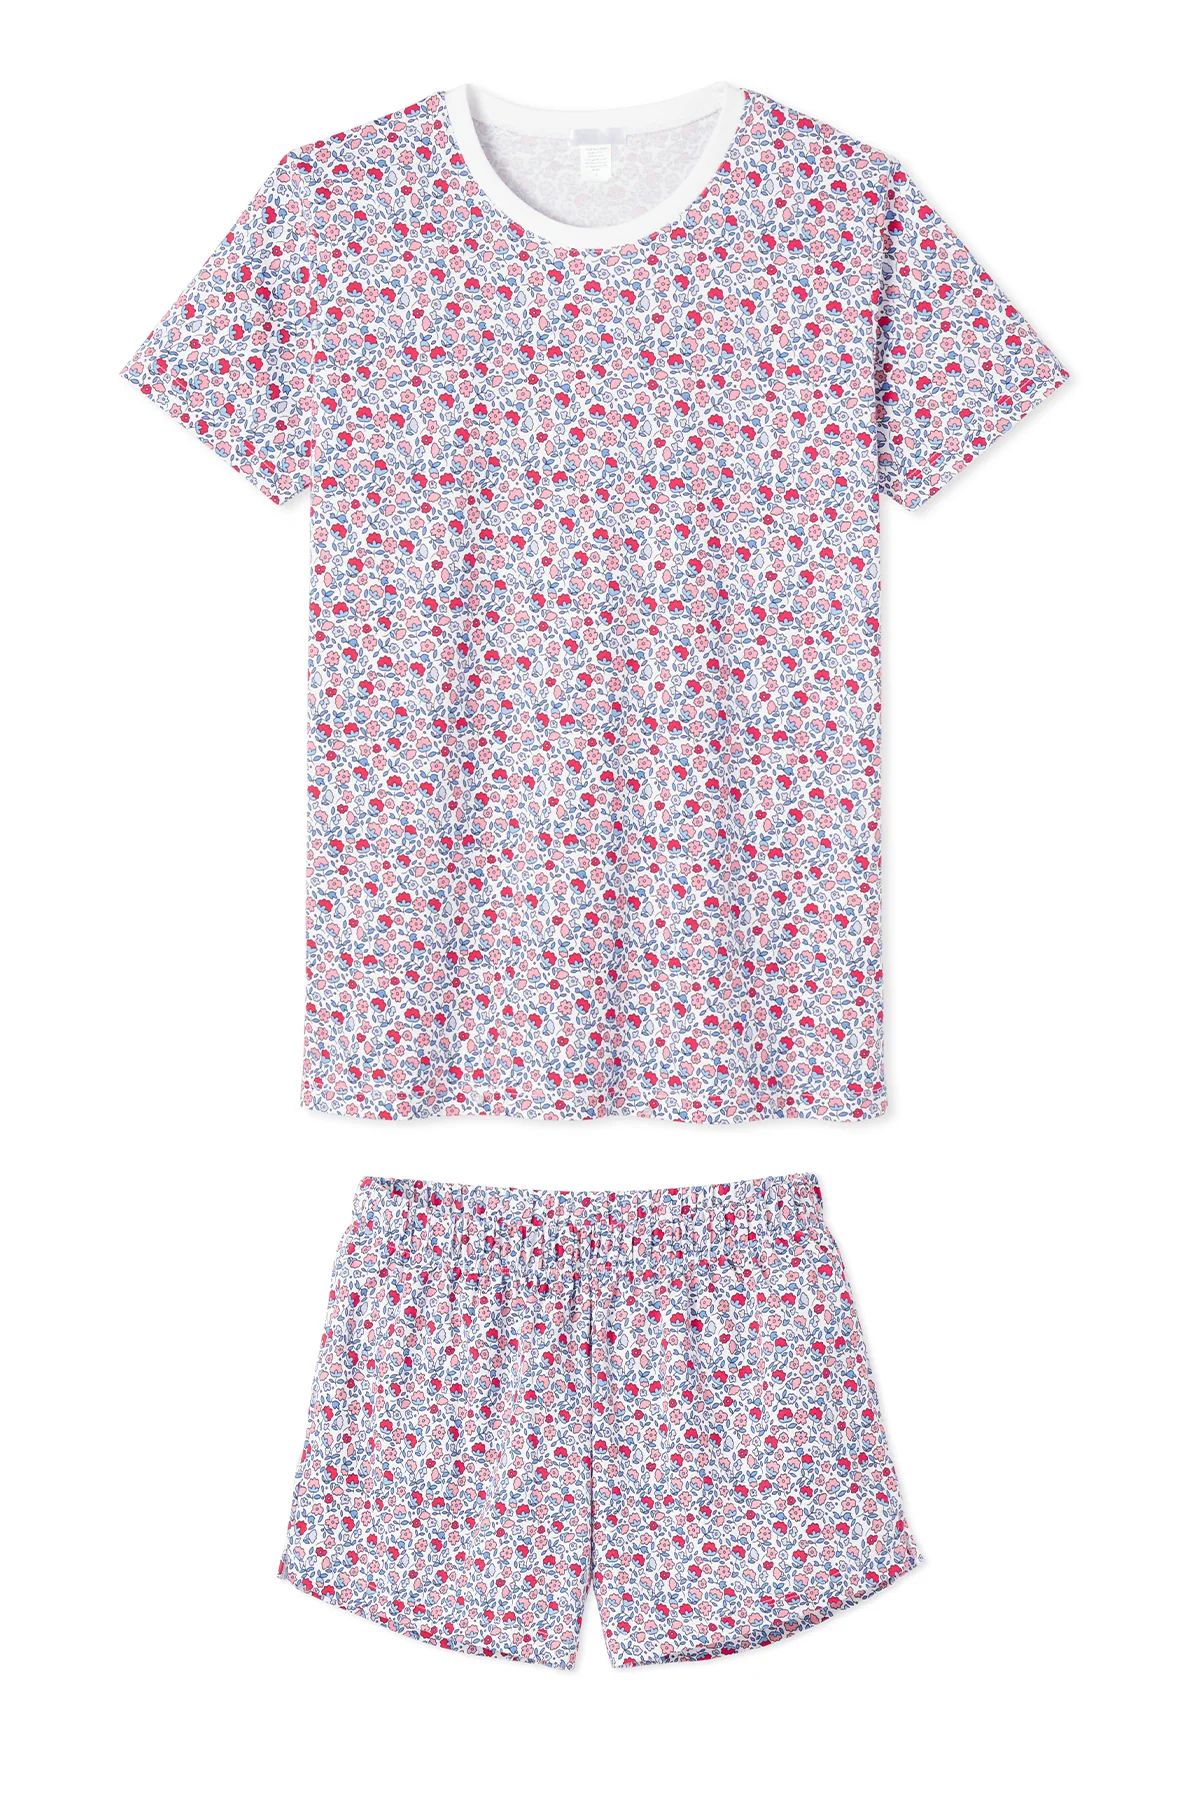 minnow x LAKE Pima Weekend Shorts Set in Americana Floral | LAKE Pajamas